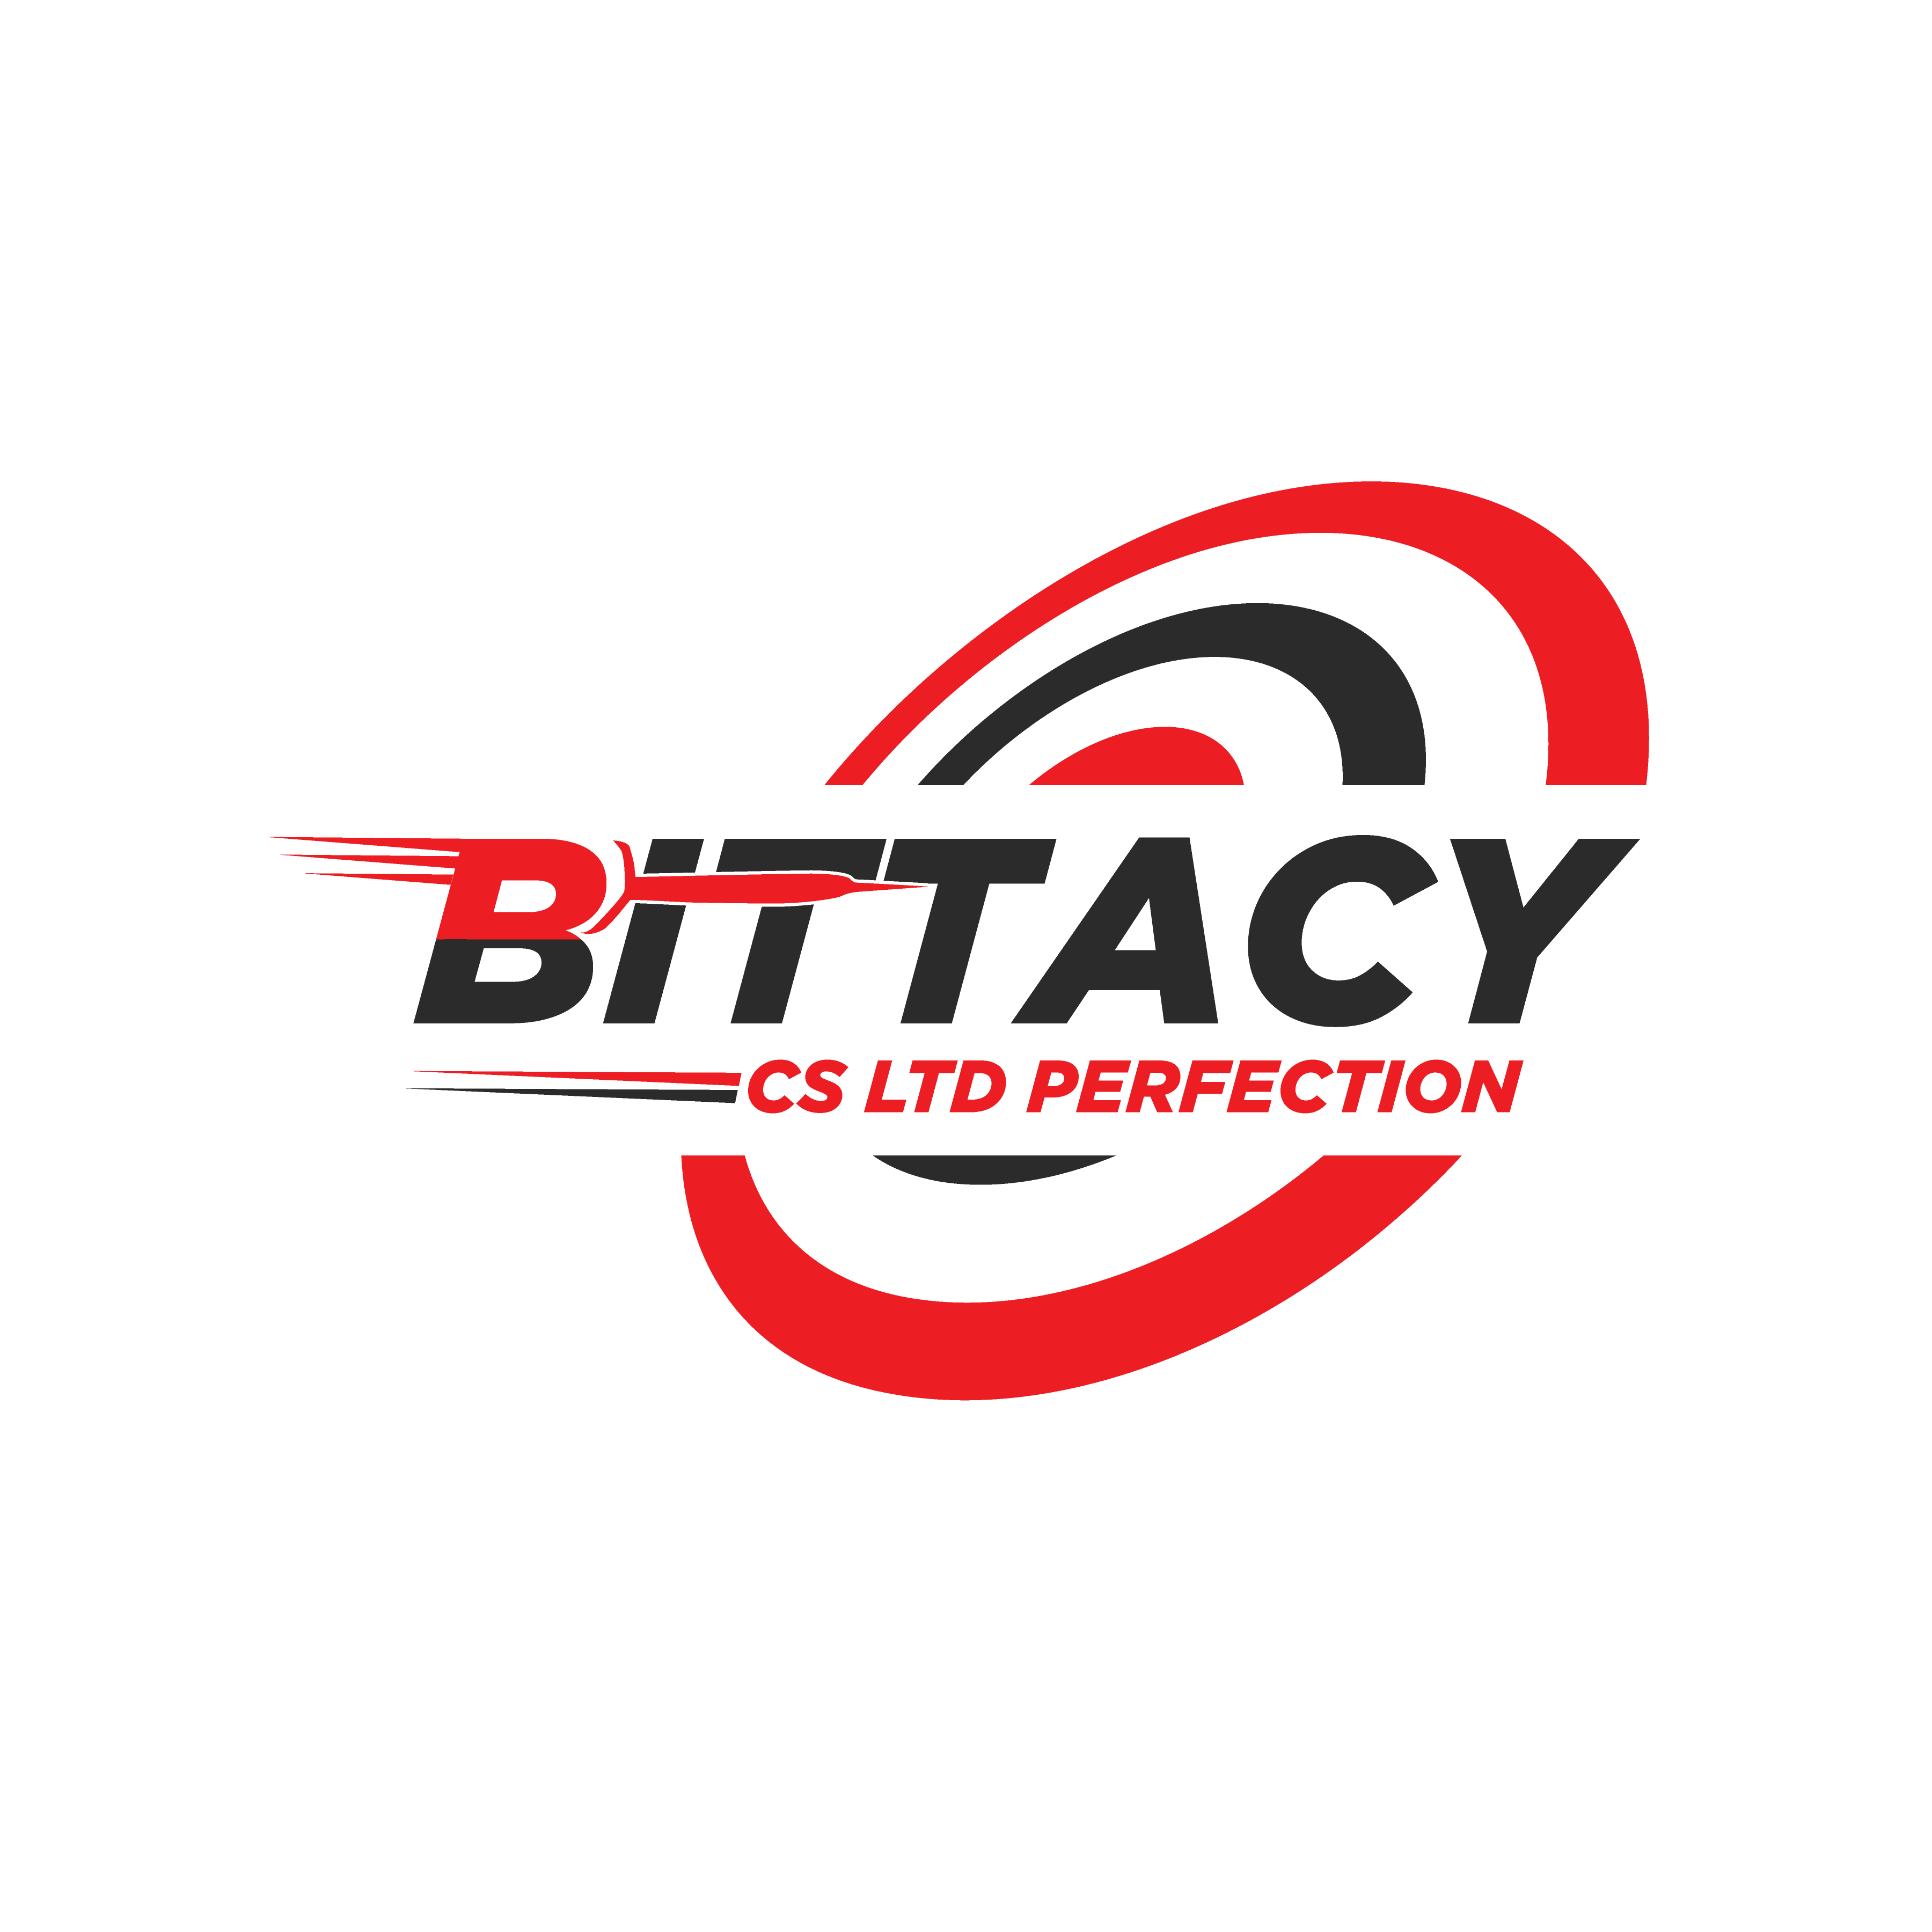 Bittacy Cars Logo